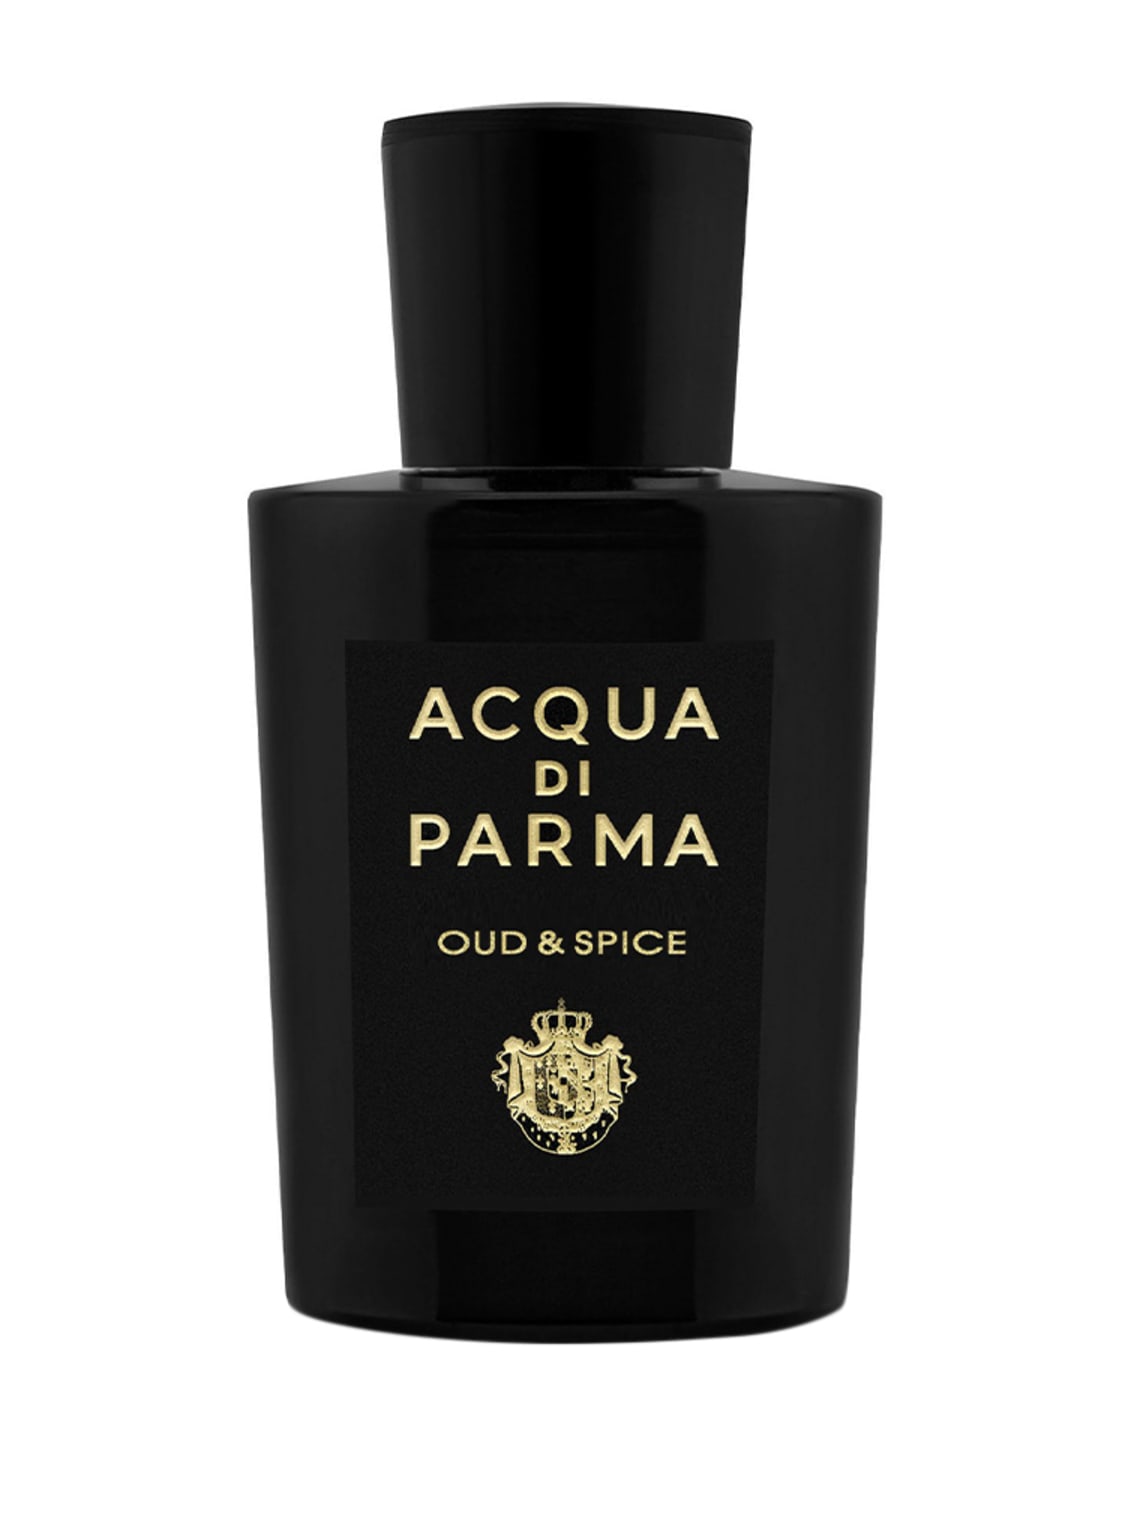 Acqua Di Parma Oud & Spice Eau de Parfum 100 ml von Acqua Di Parma